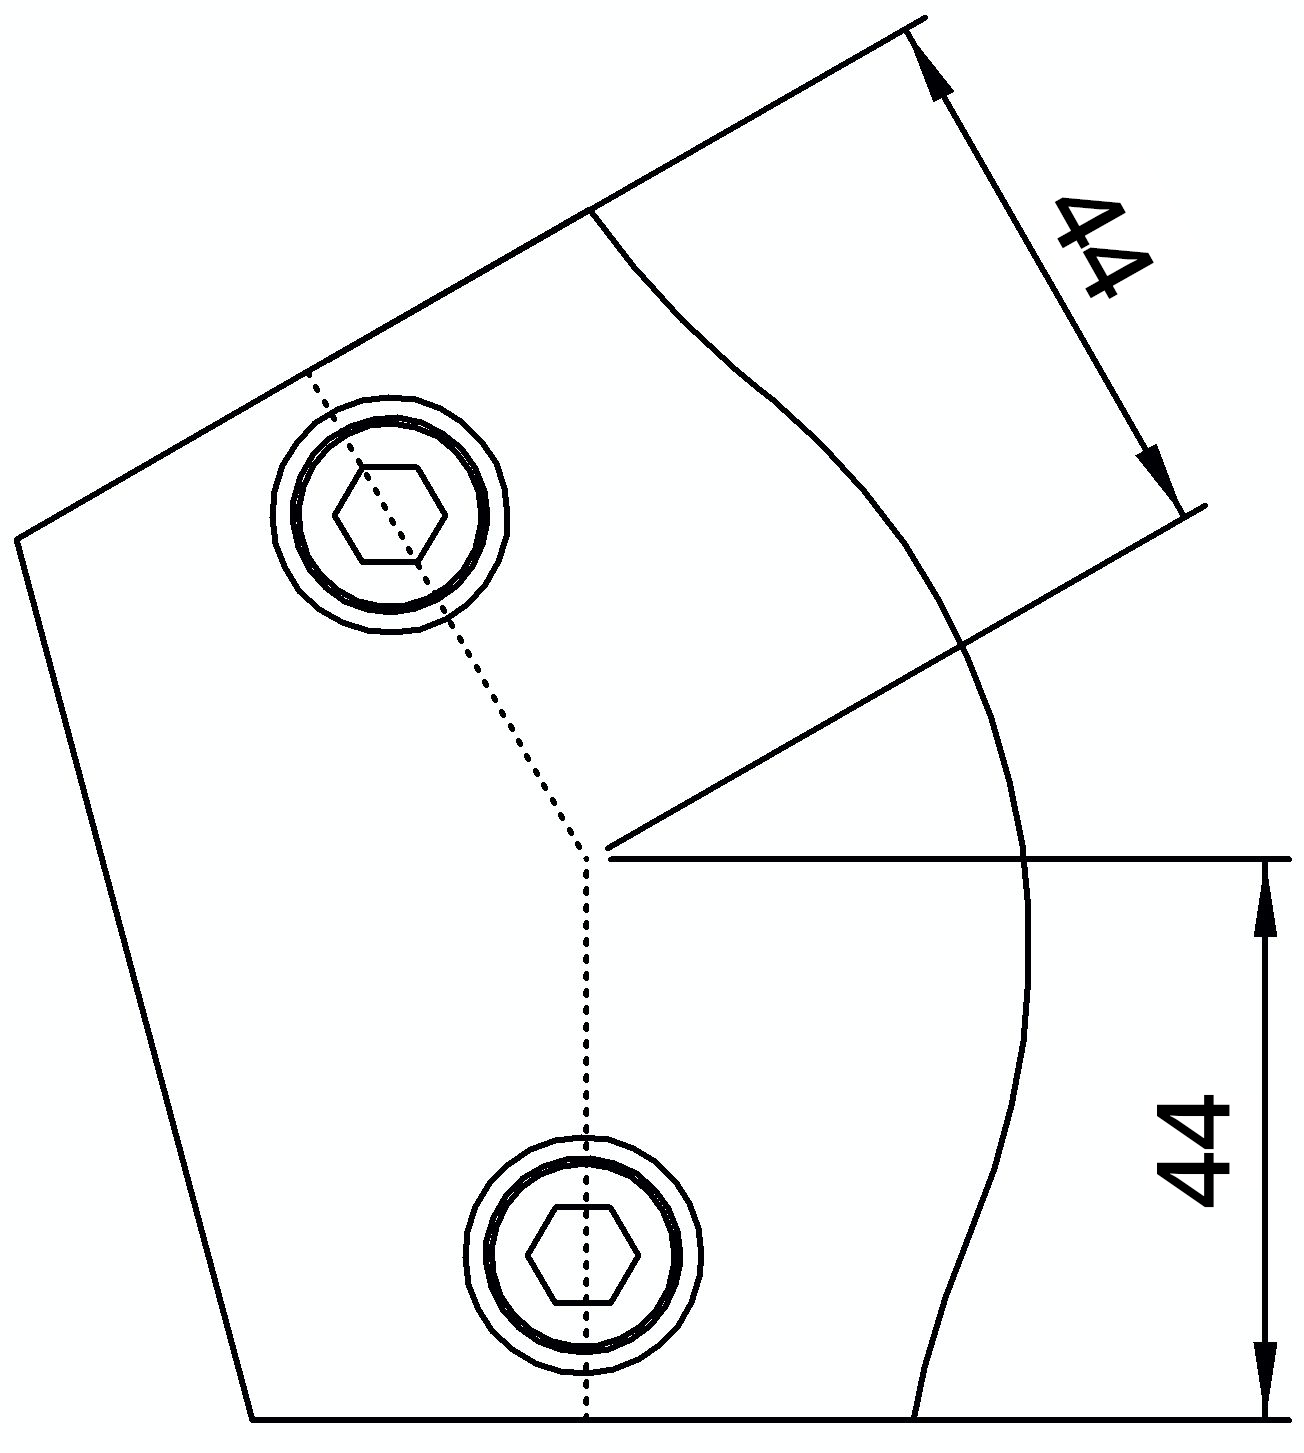 Rohrverbinder | Bogen variabel 15-60° | 124D48 | 48,3 mm | 1 1/2" | Feuerverzinkt u. Elektrogalvanisiert